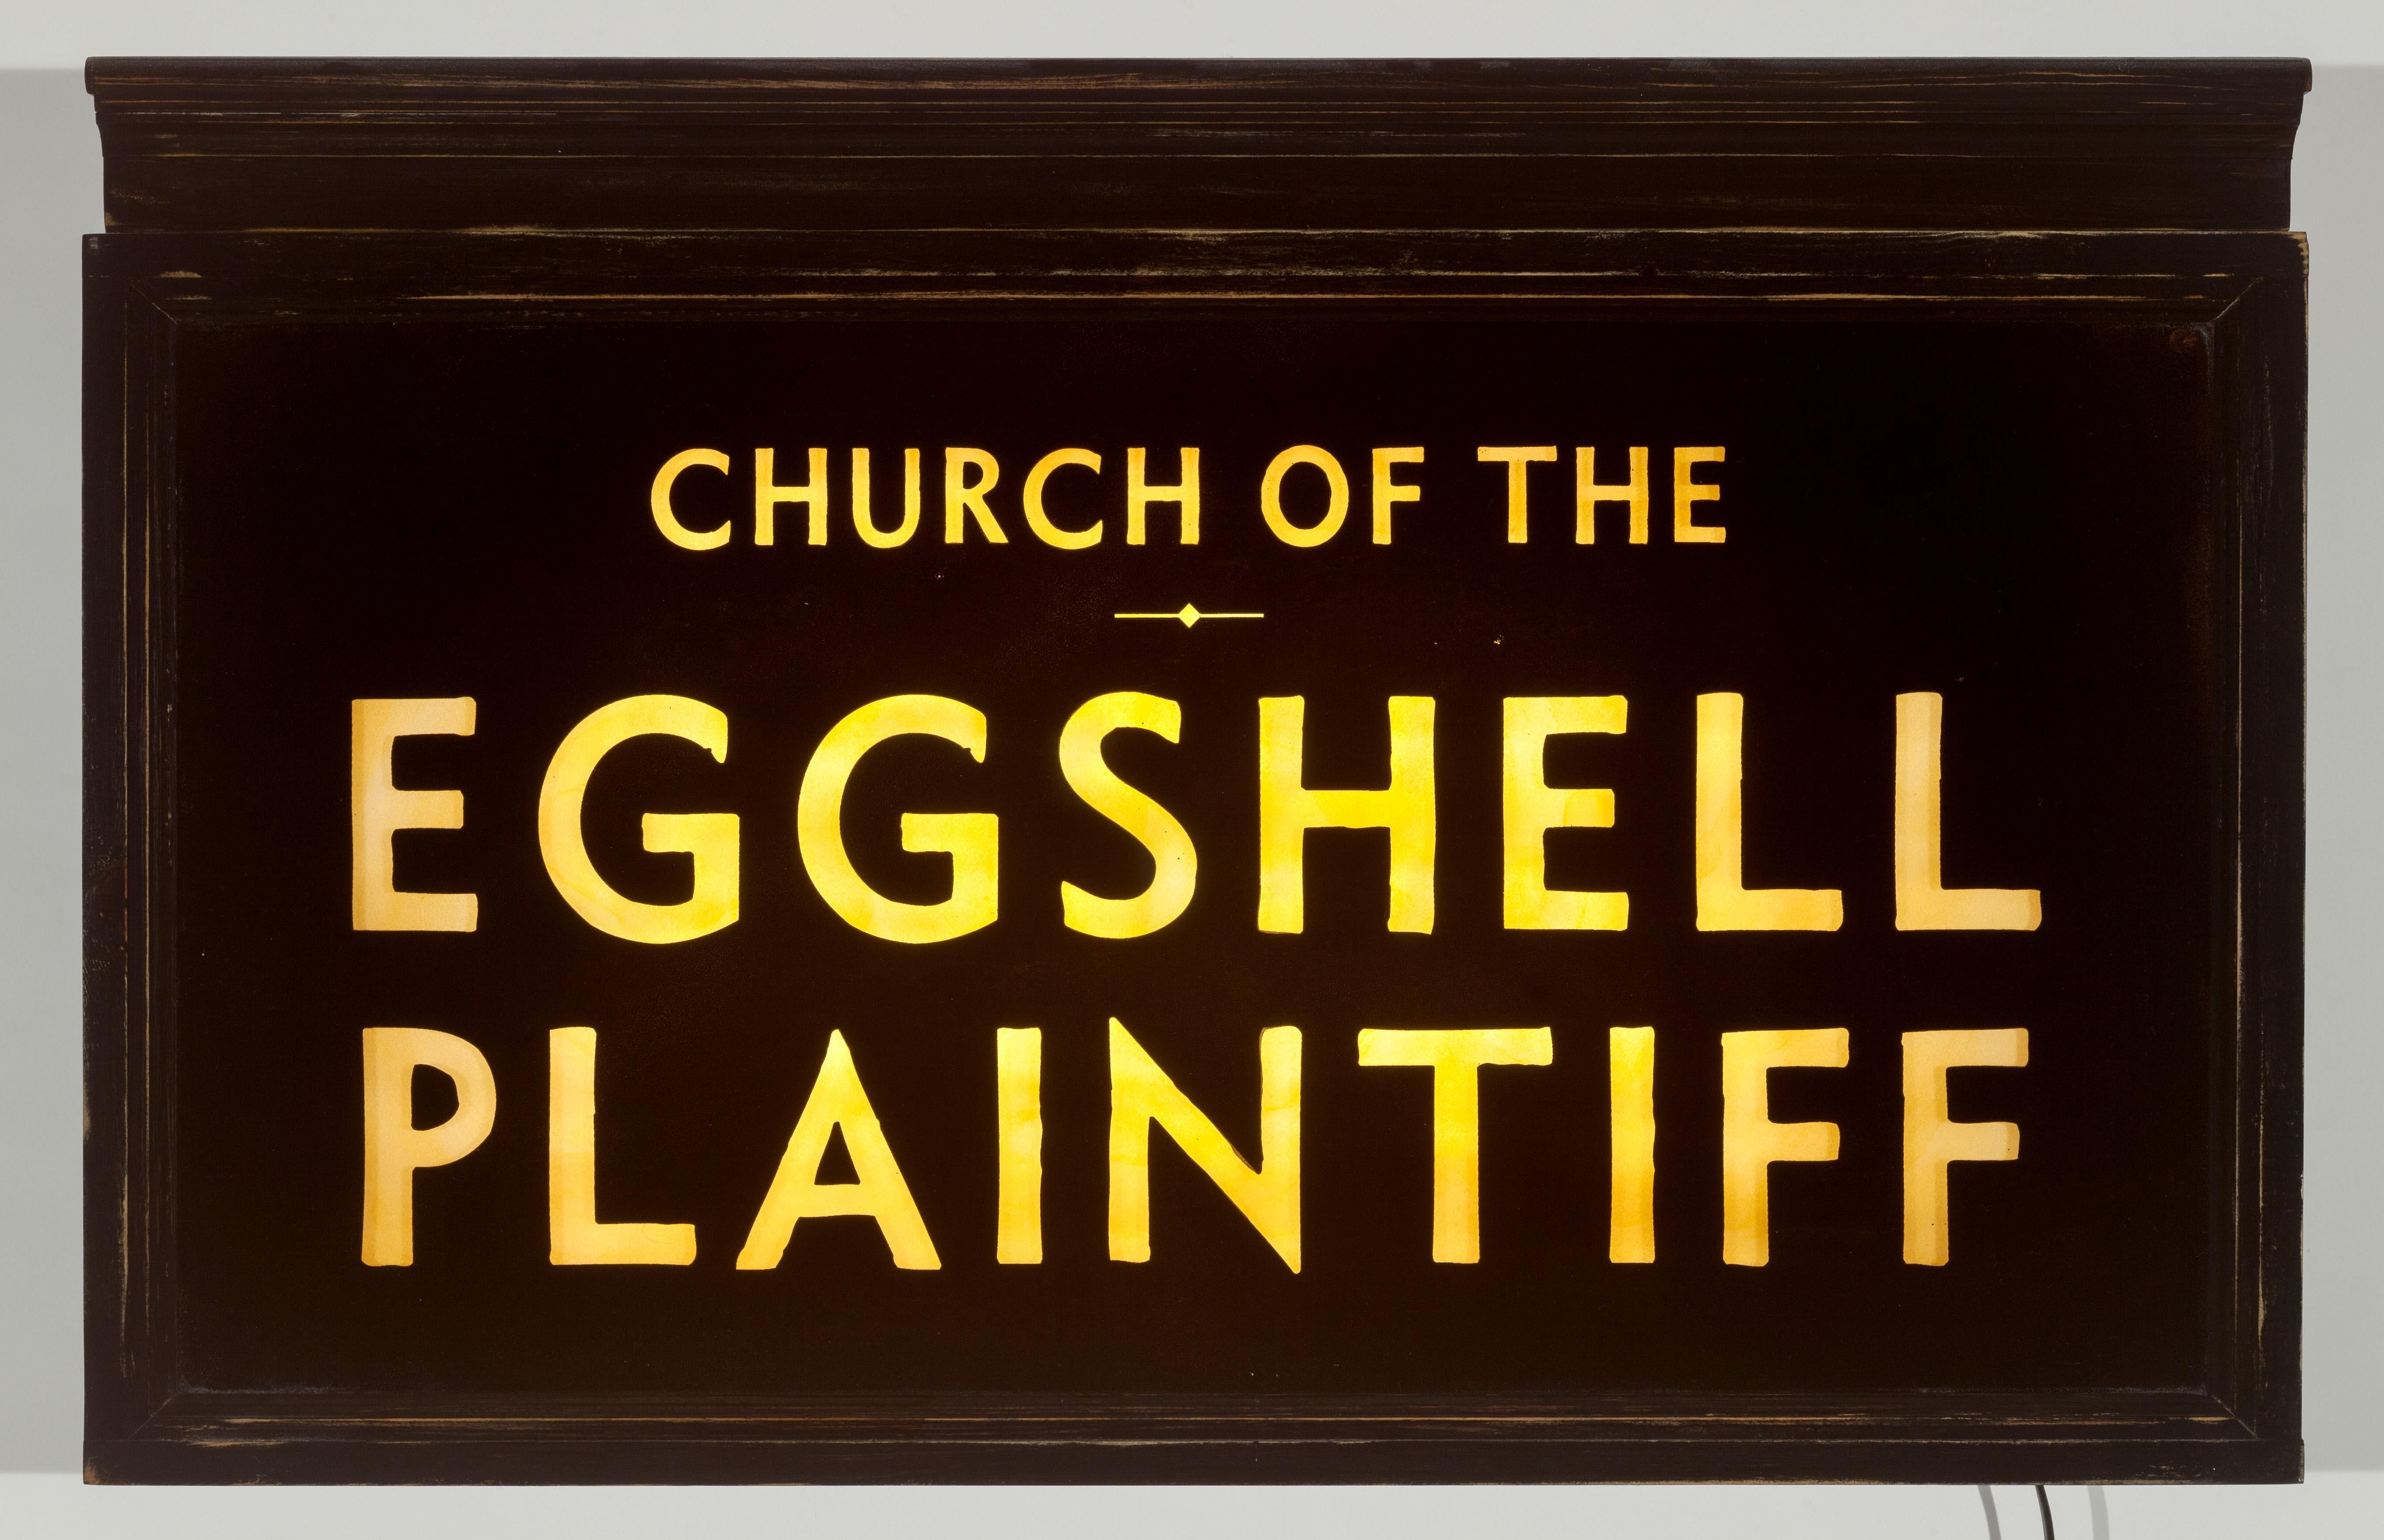 Church of the Eggshell Plaintiff - Mixed Media Art by Skylar Fein